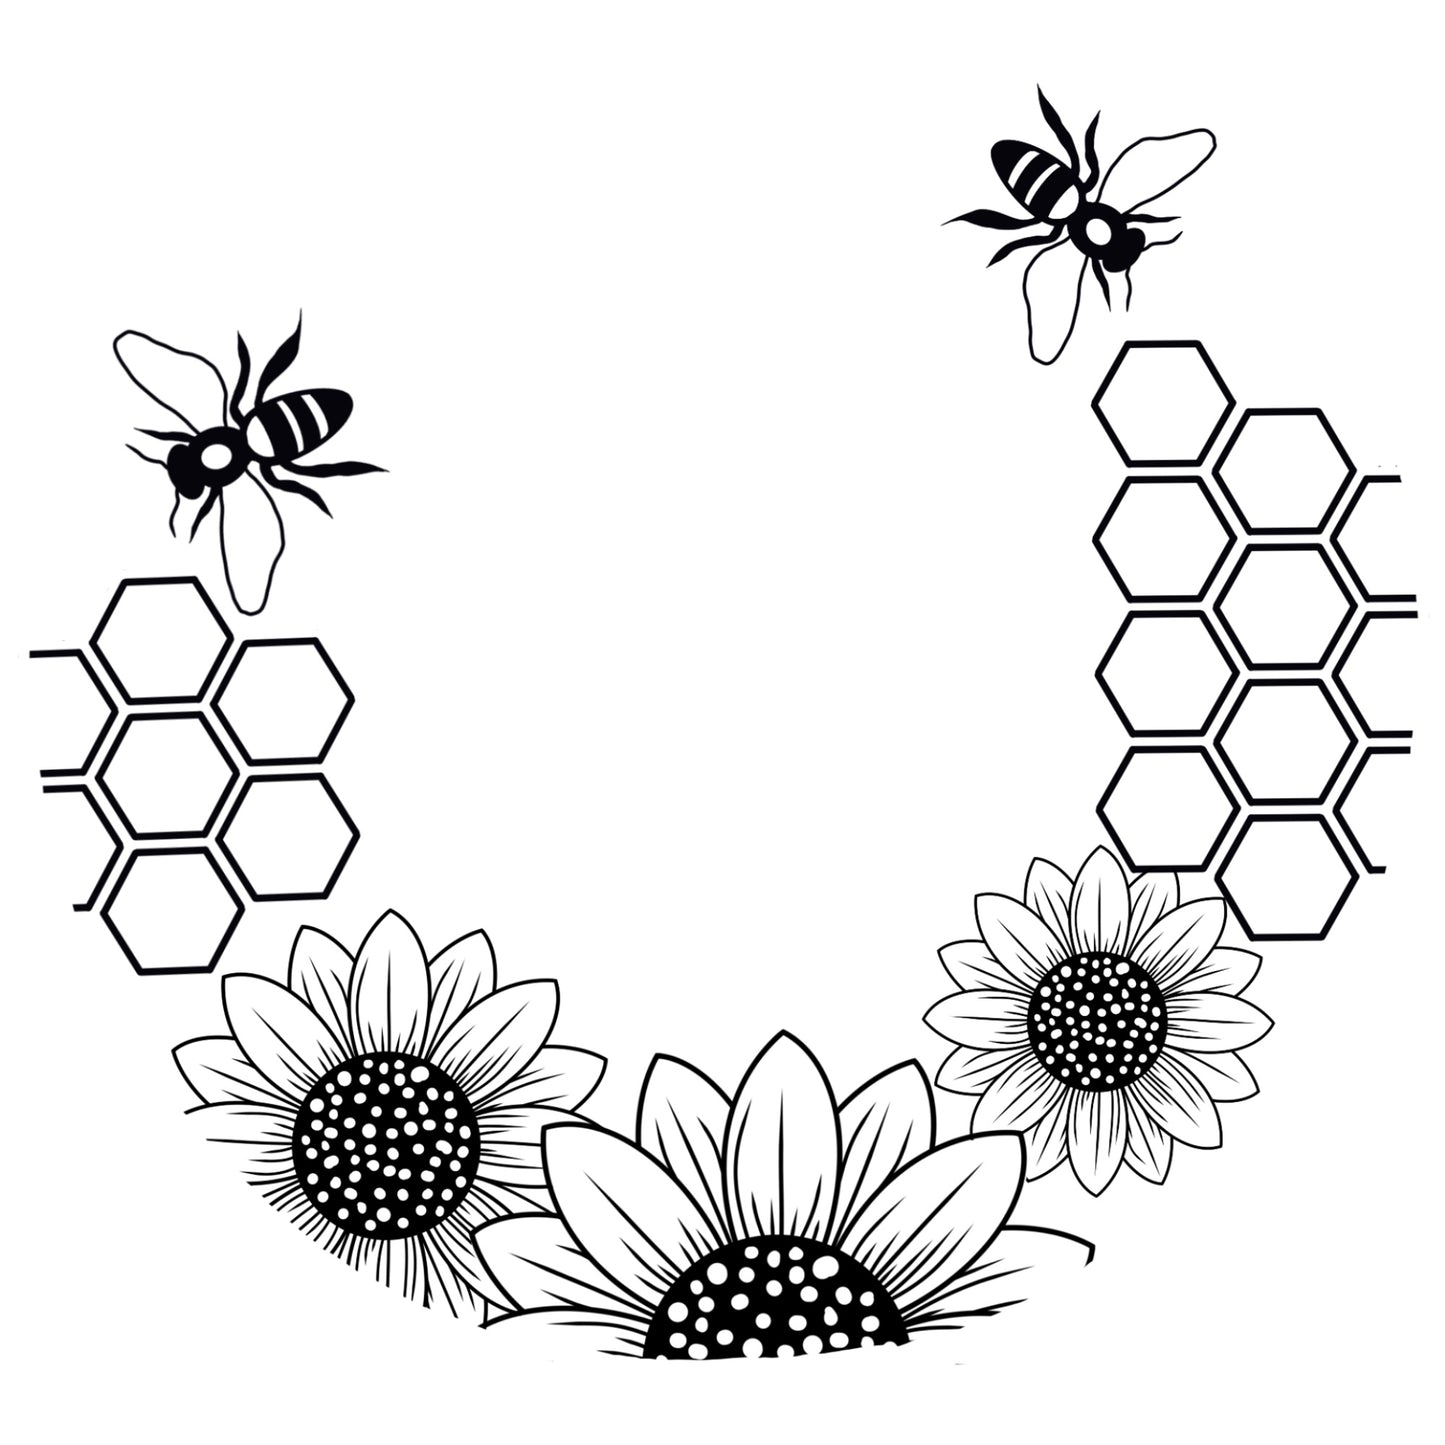 Sunflower Honeycomb Bees hat burning design